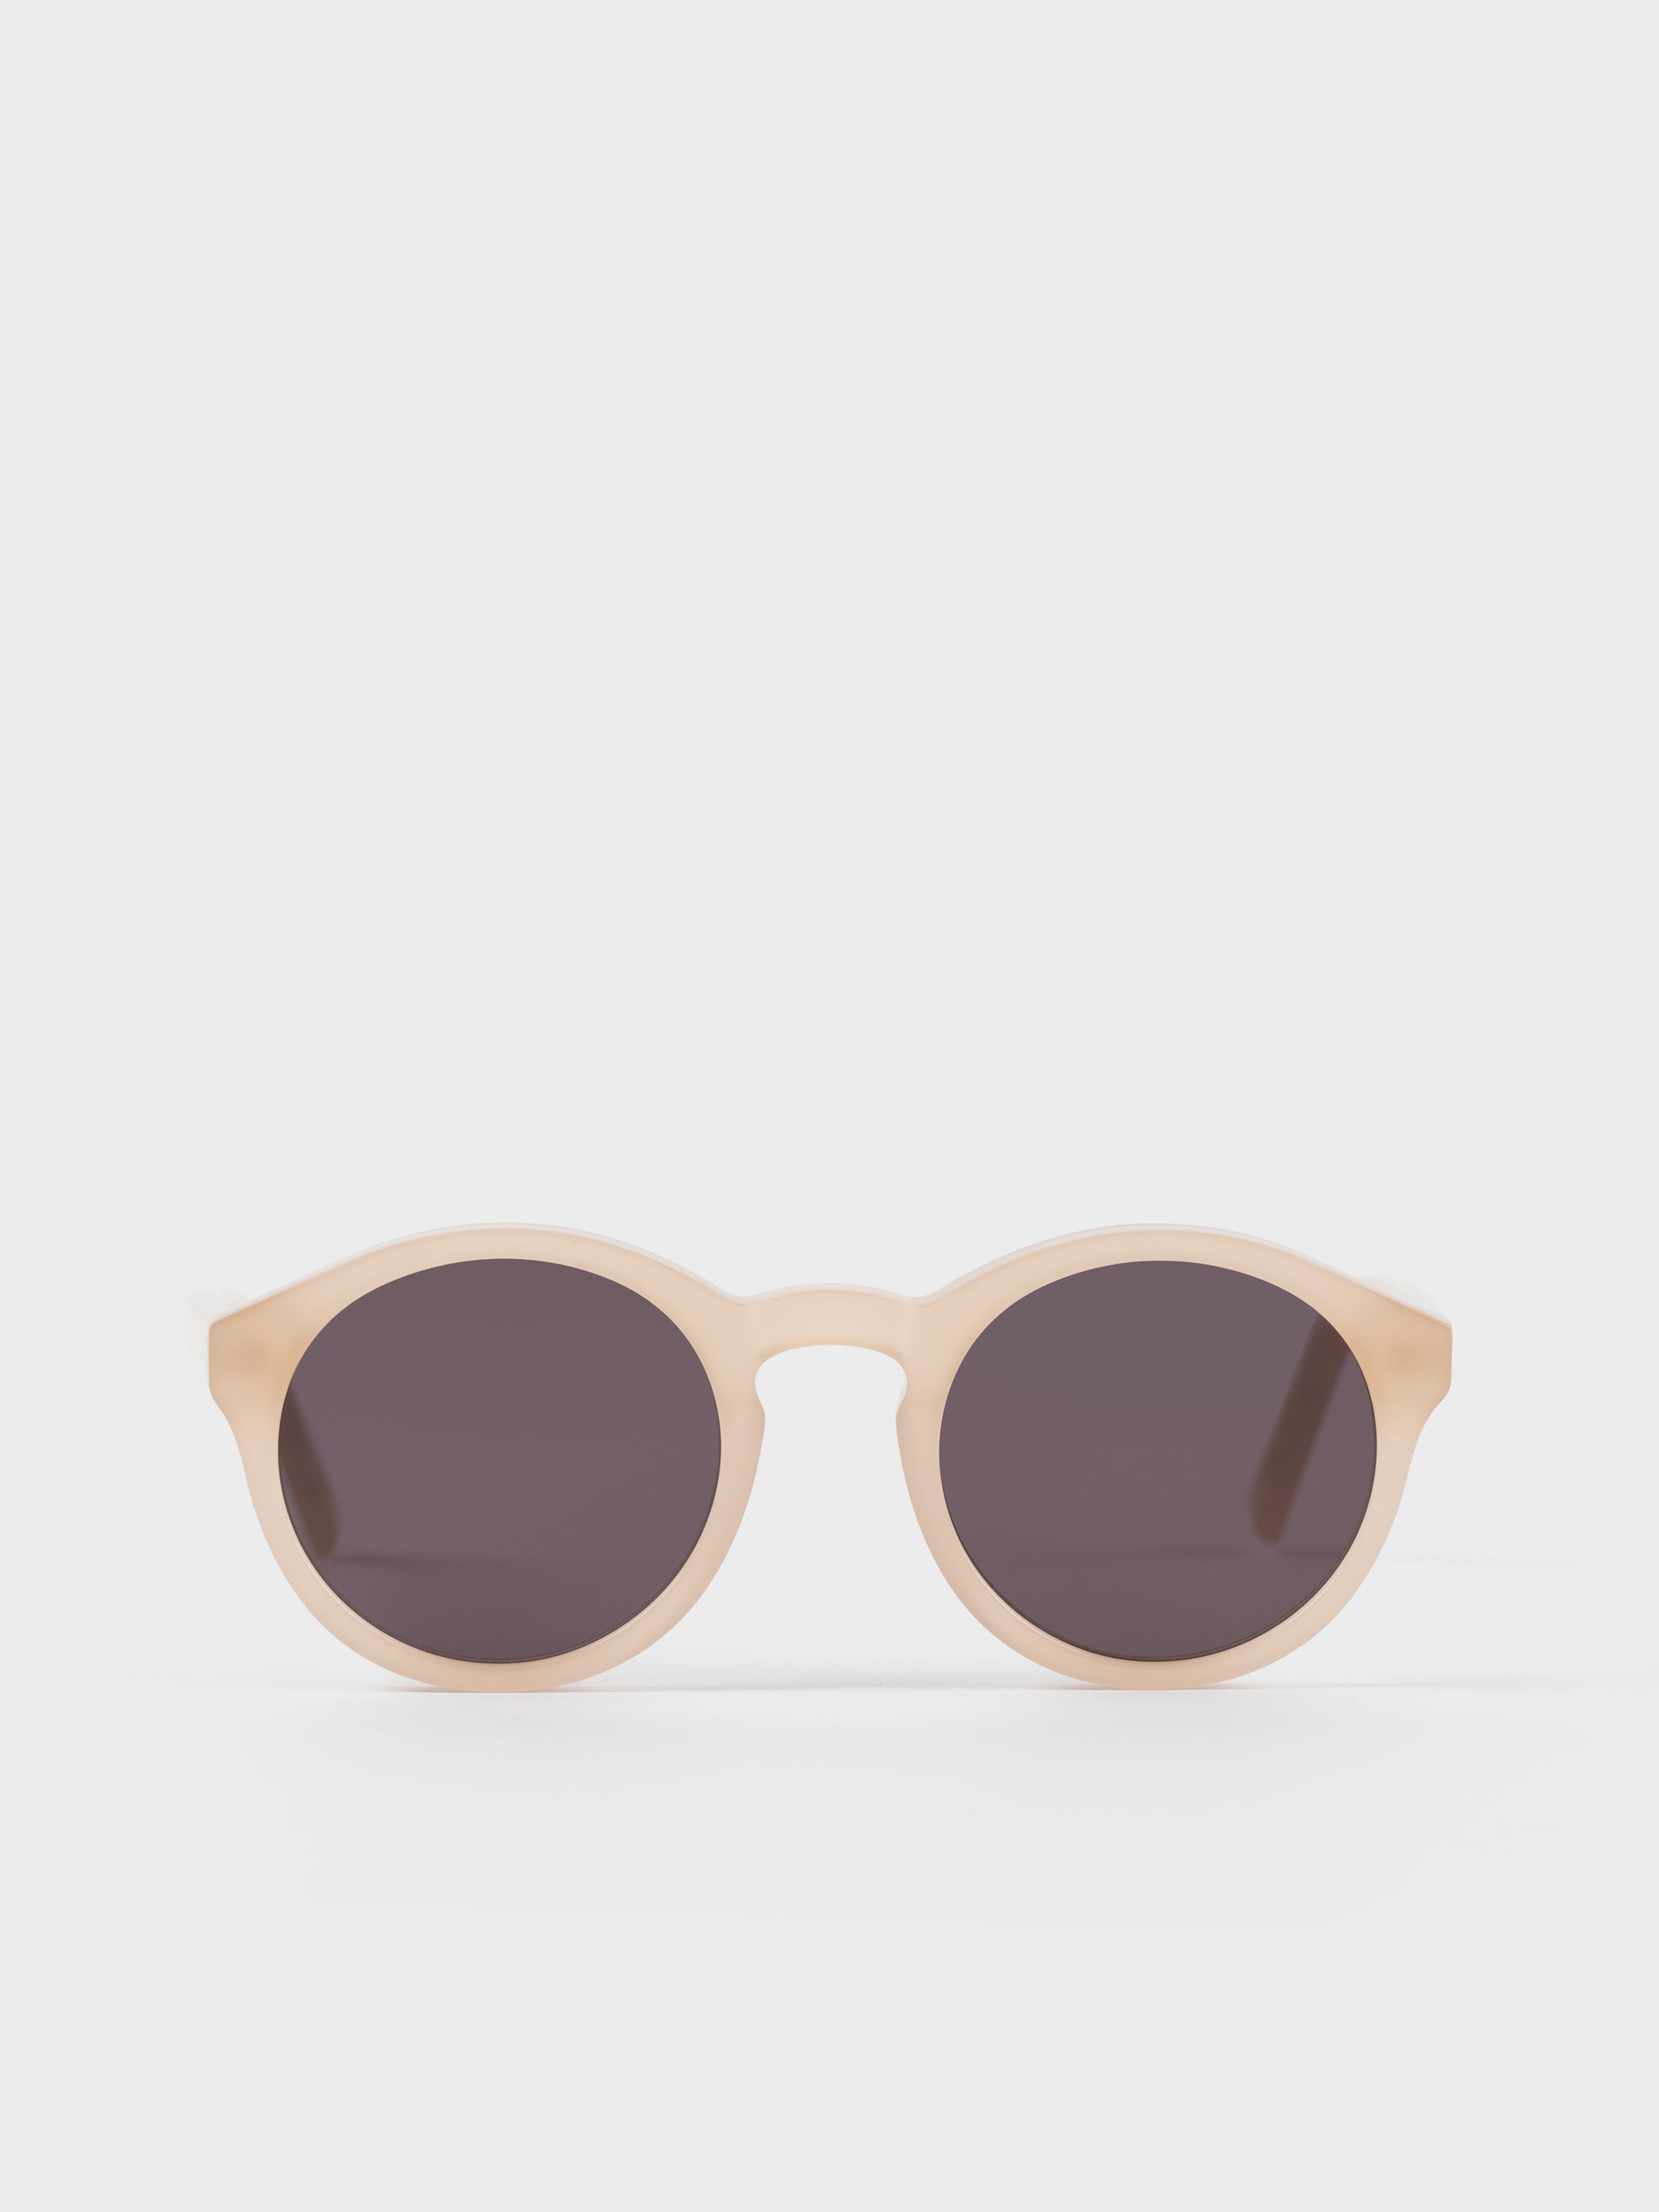 Monokel Sunglasses - Barstow Sand/Grey Lens